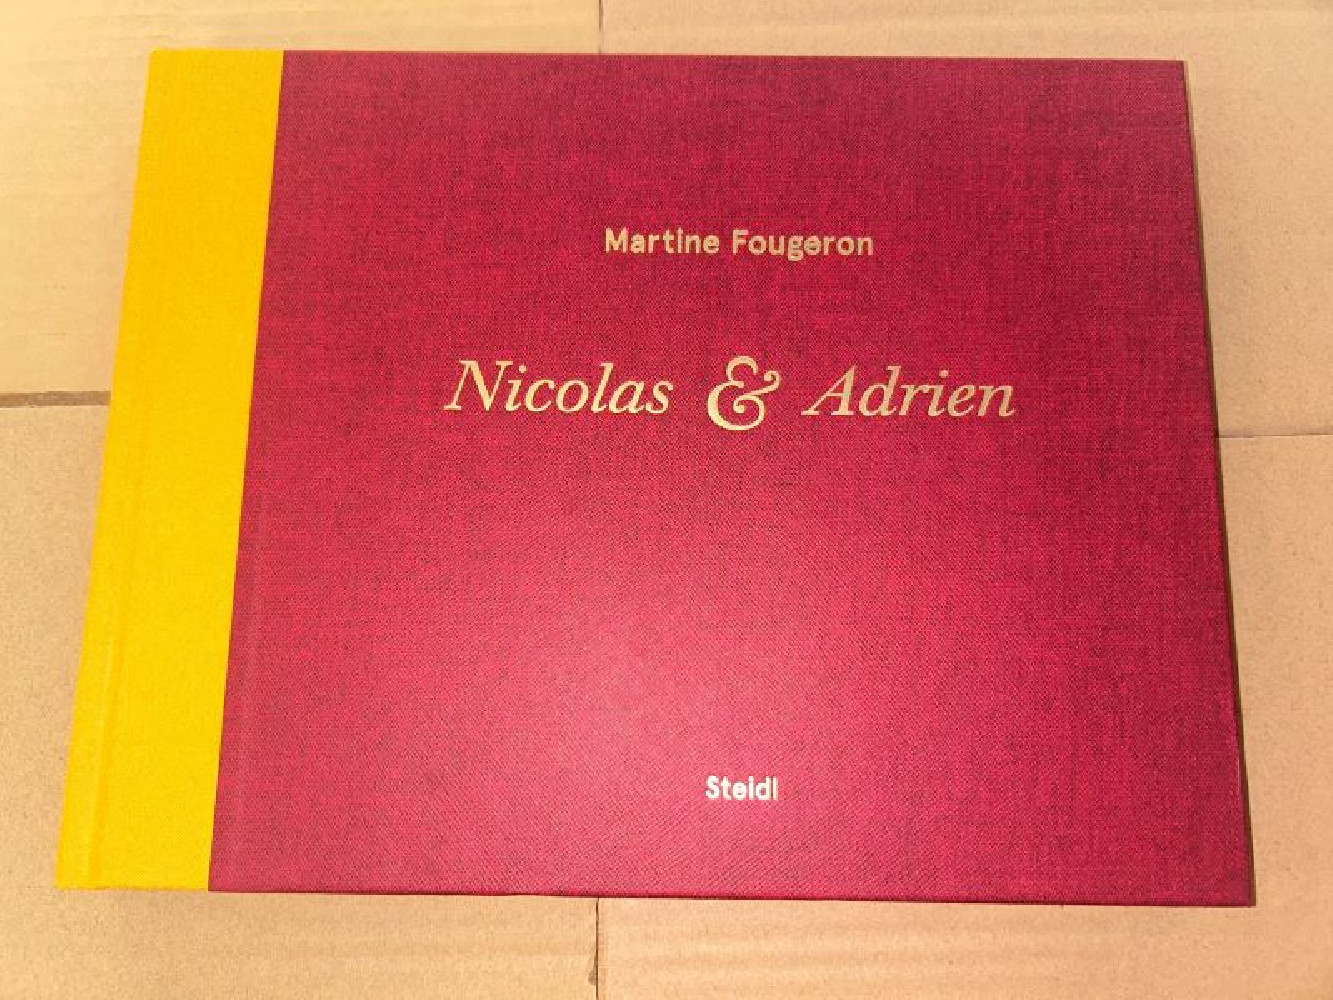 Martine fougeron - Nicolas et Adrien